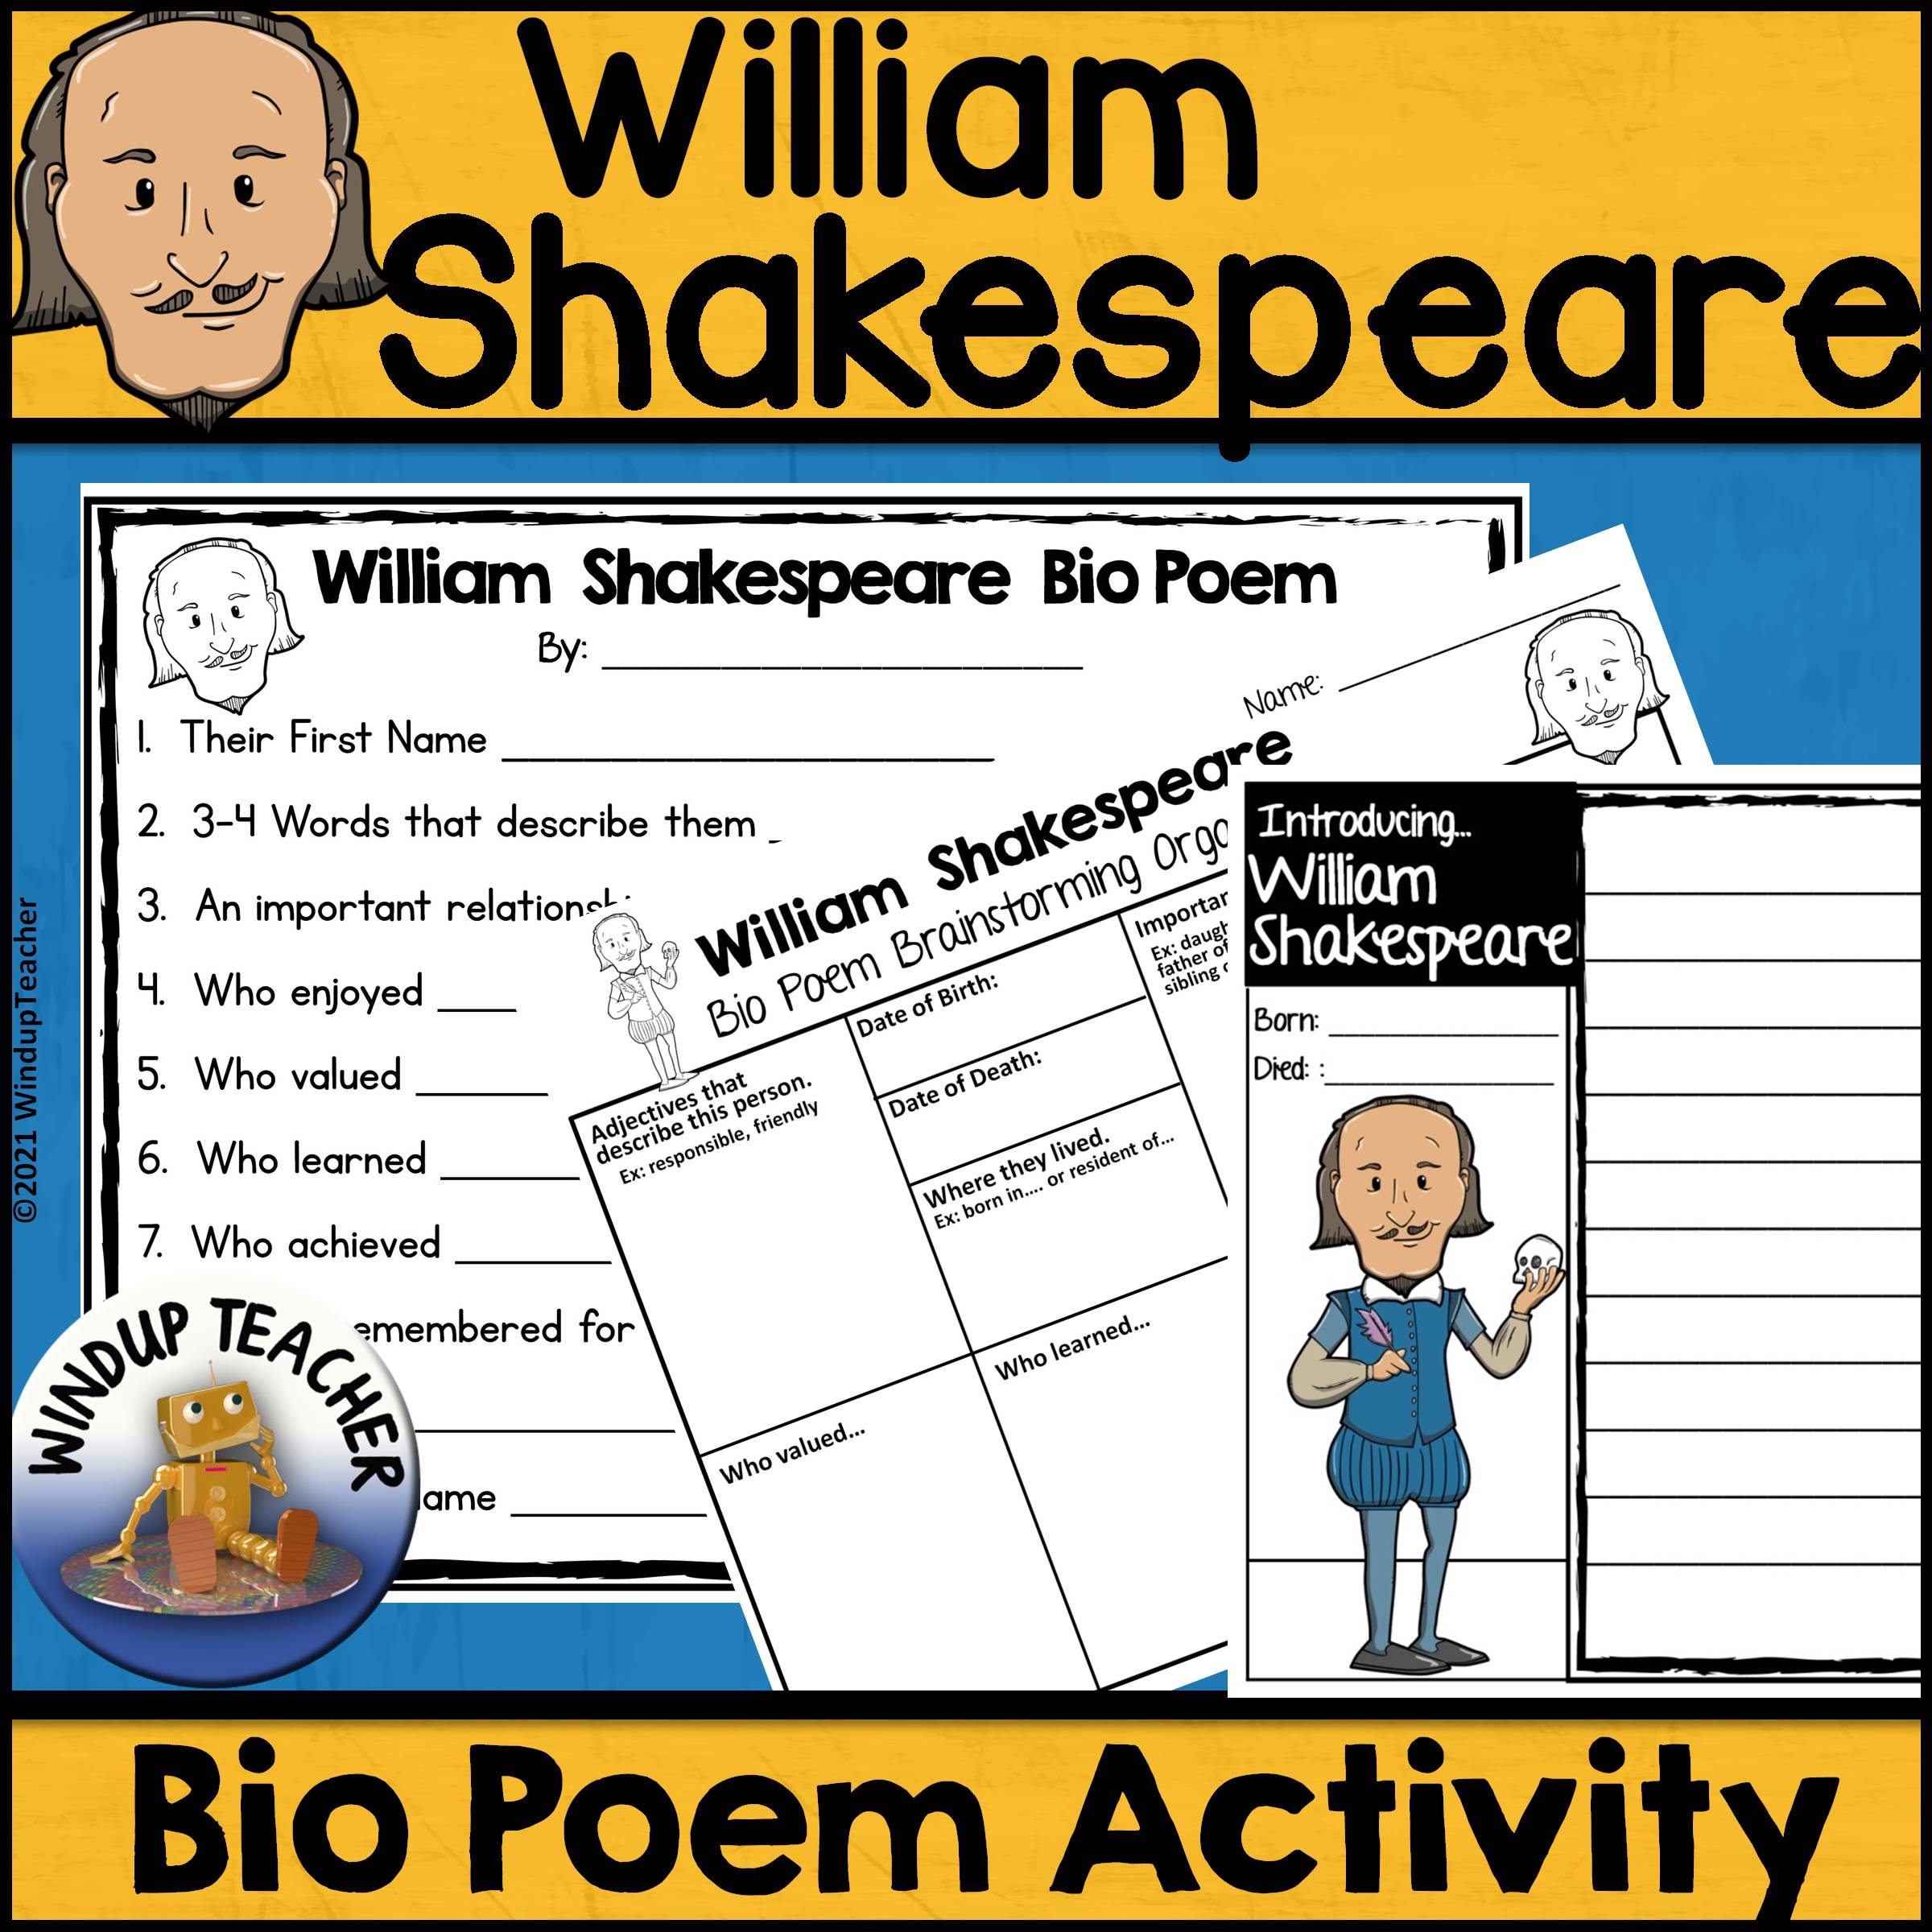 William Shakespeare Poem Writing Activity